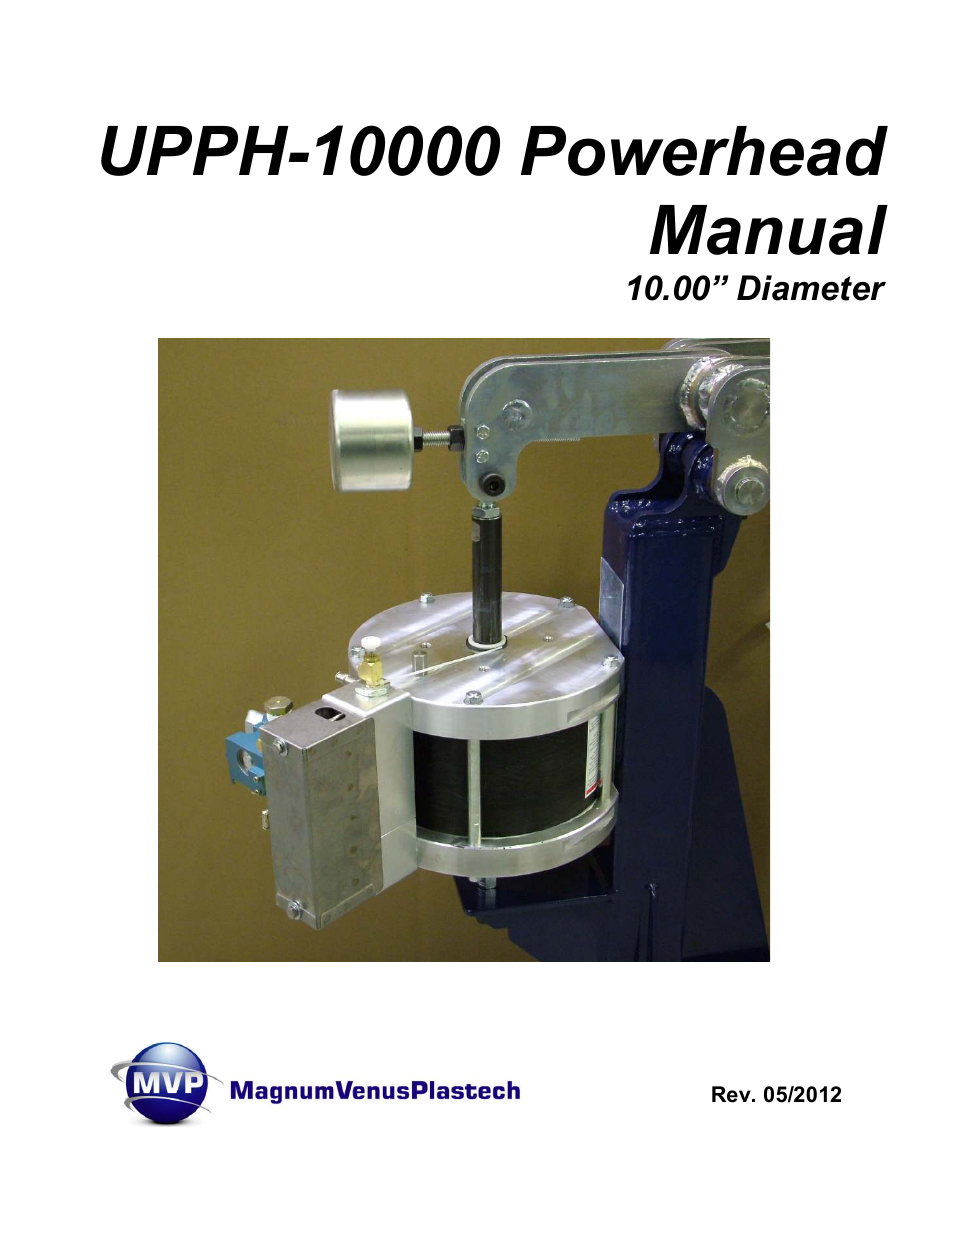 Powerhead UPPH-10000